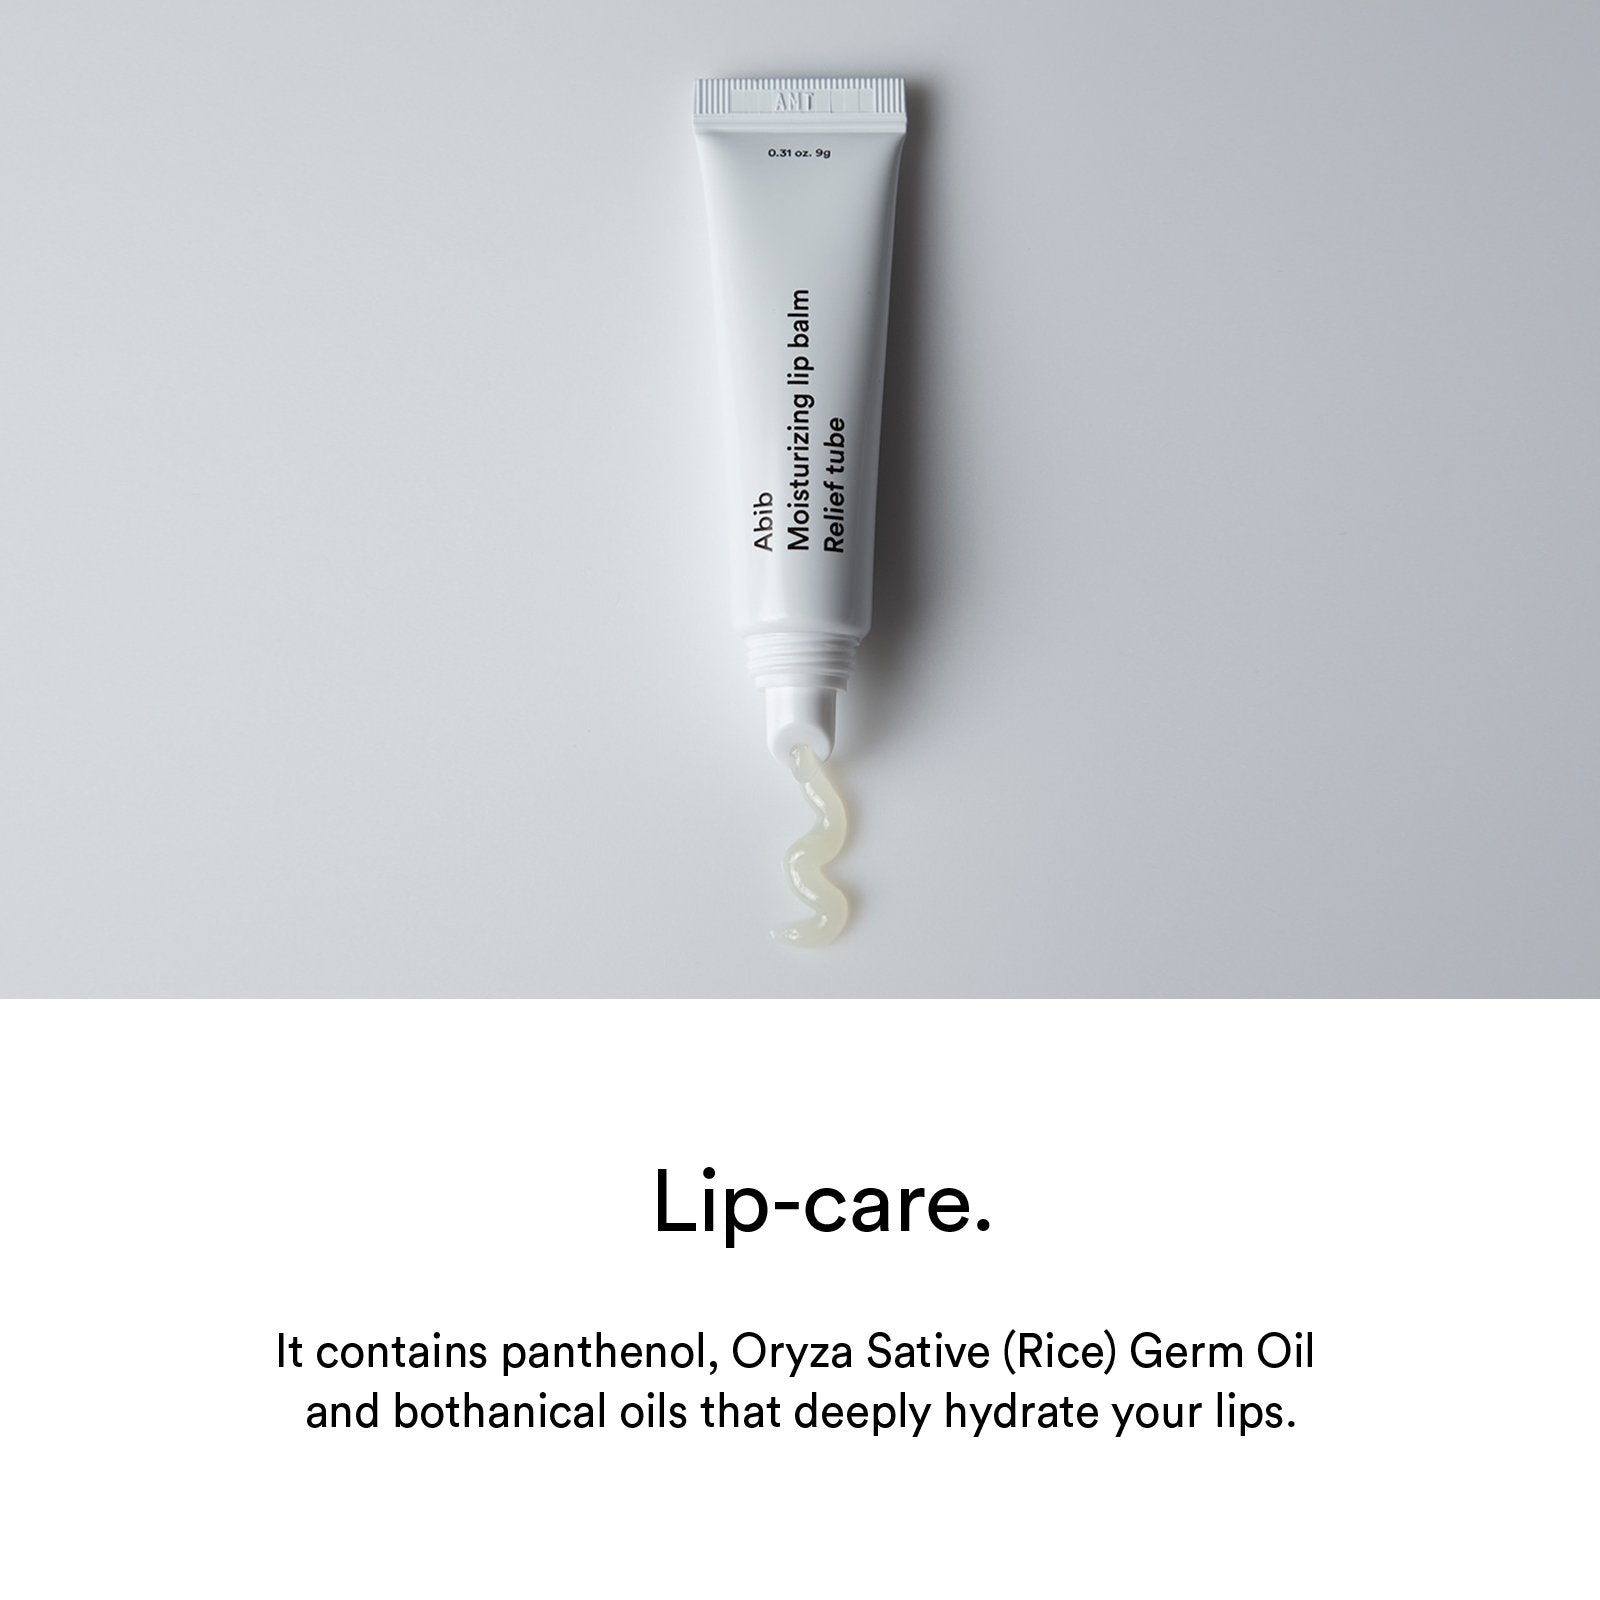 Abib - Moisturizing Lip Balm Relief Tube